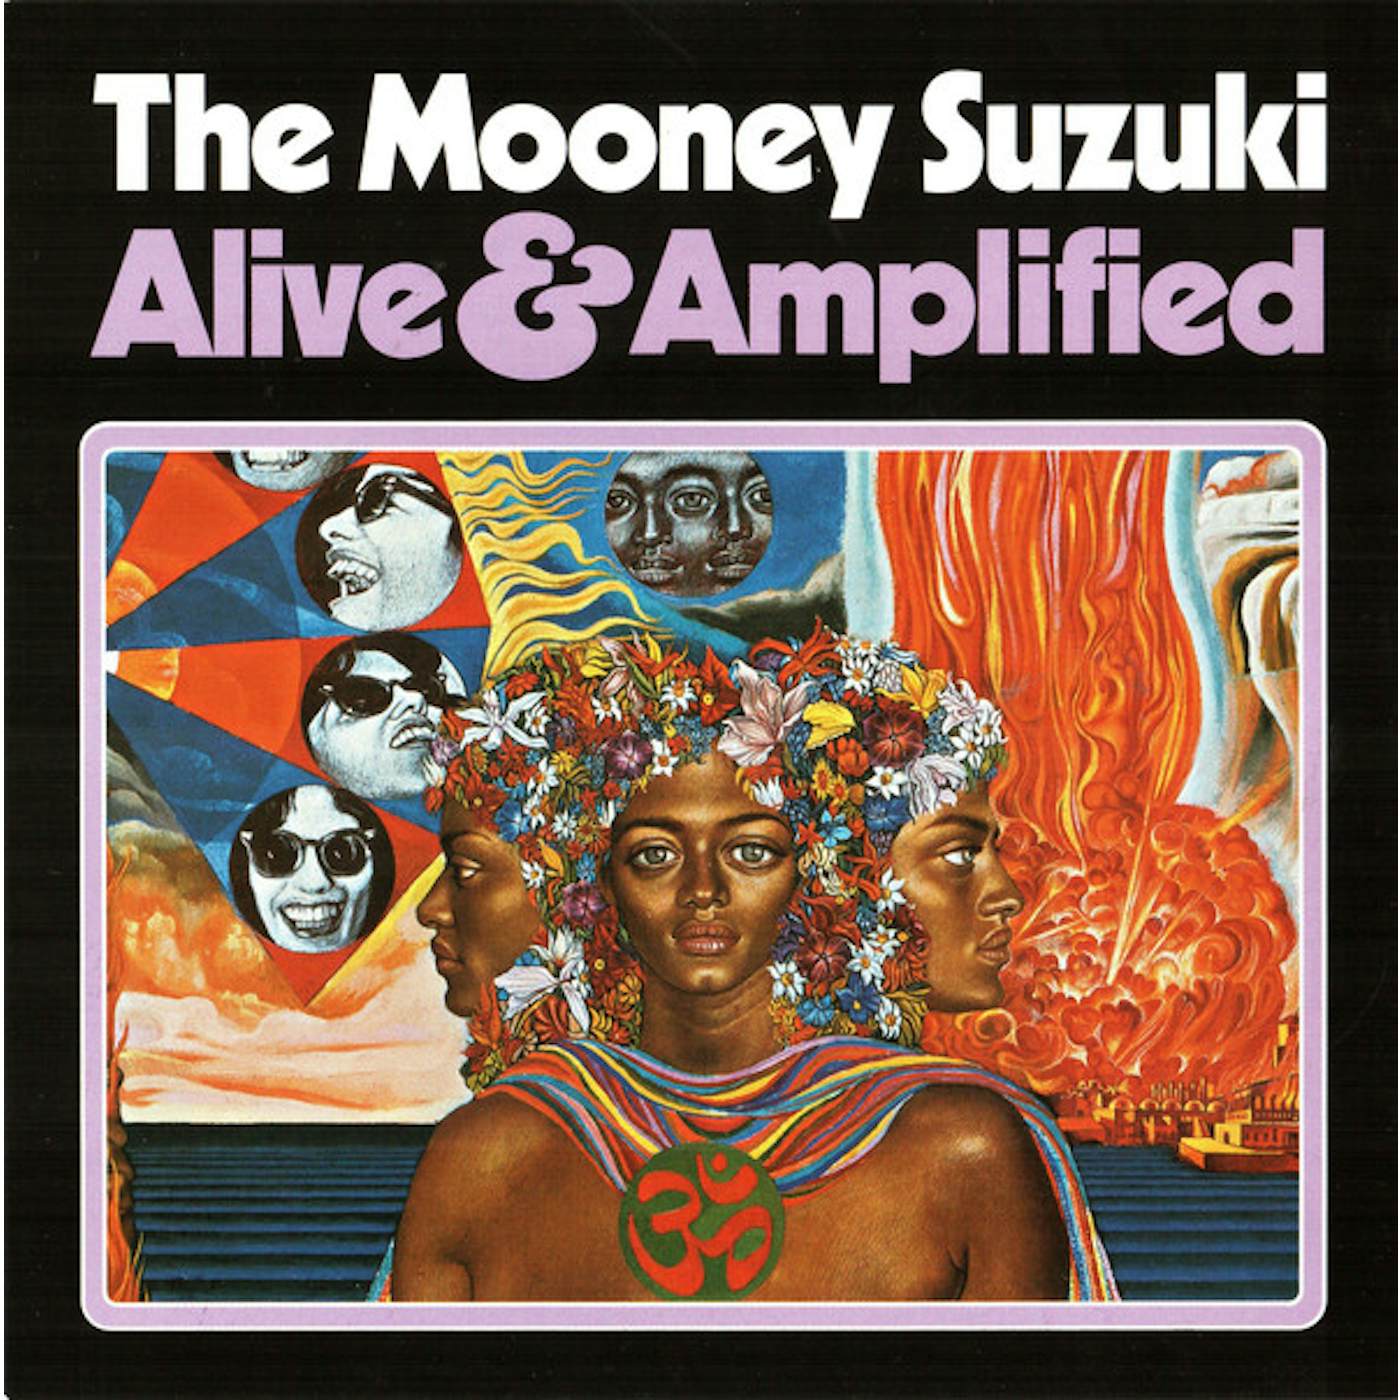 The Mooney Suzuki ALIVE & AMPLIFIED CD